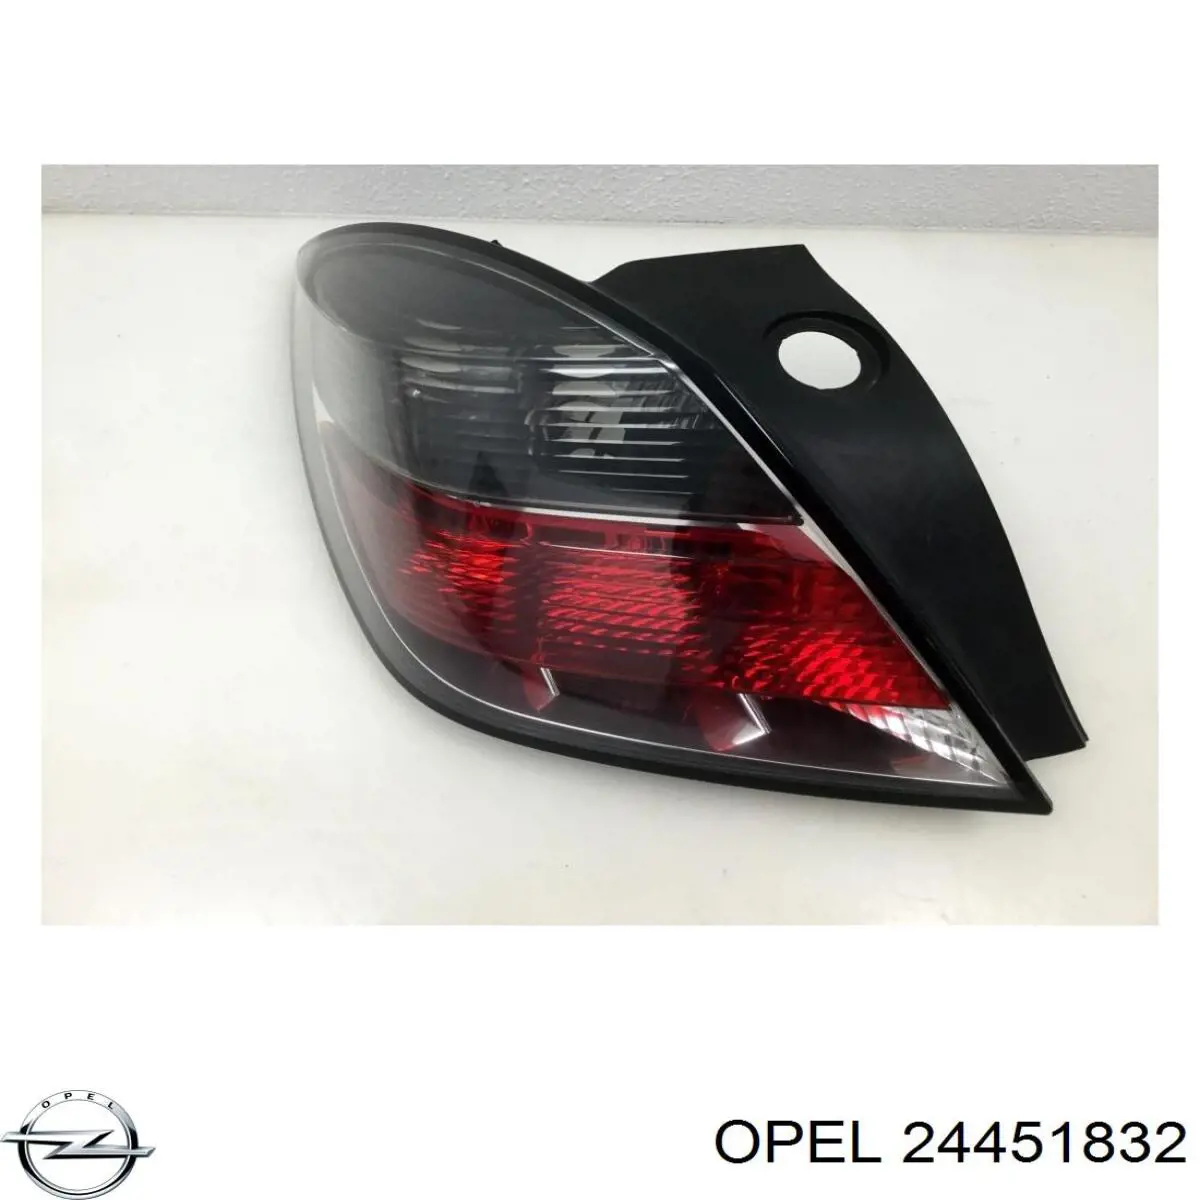 24451832 Opel фонарь задний левый